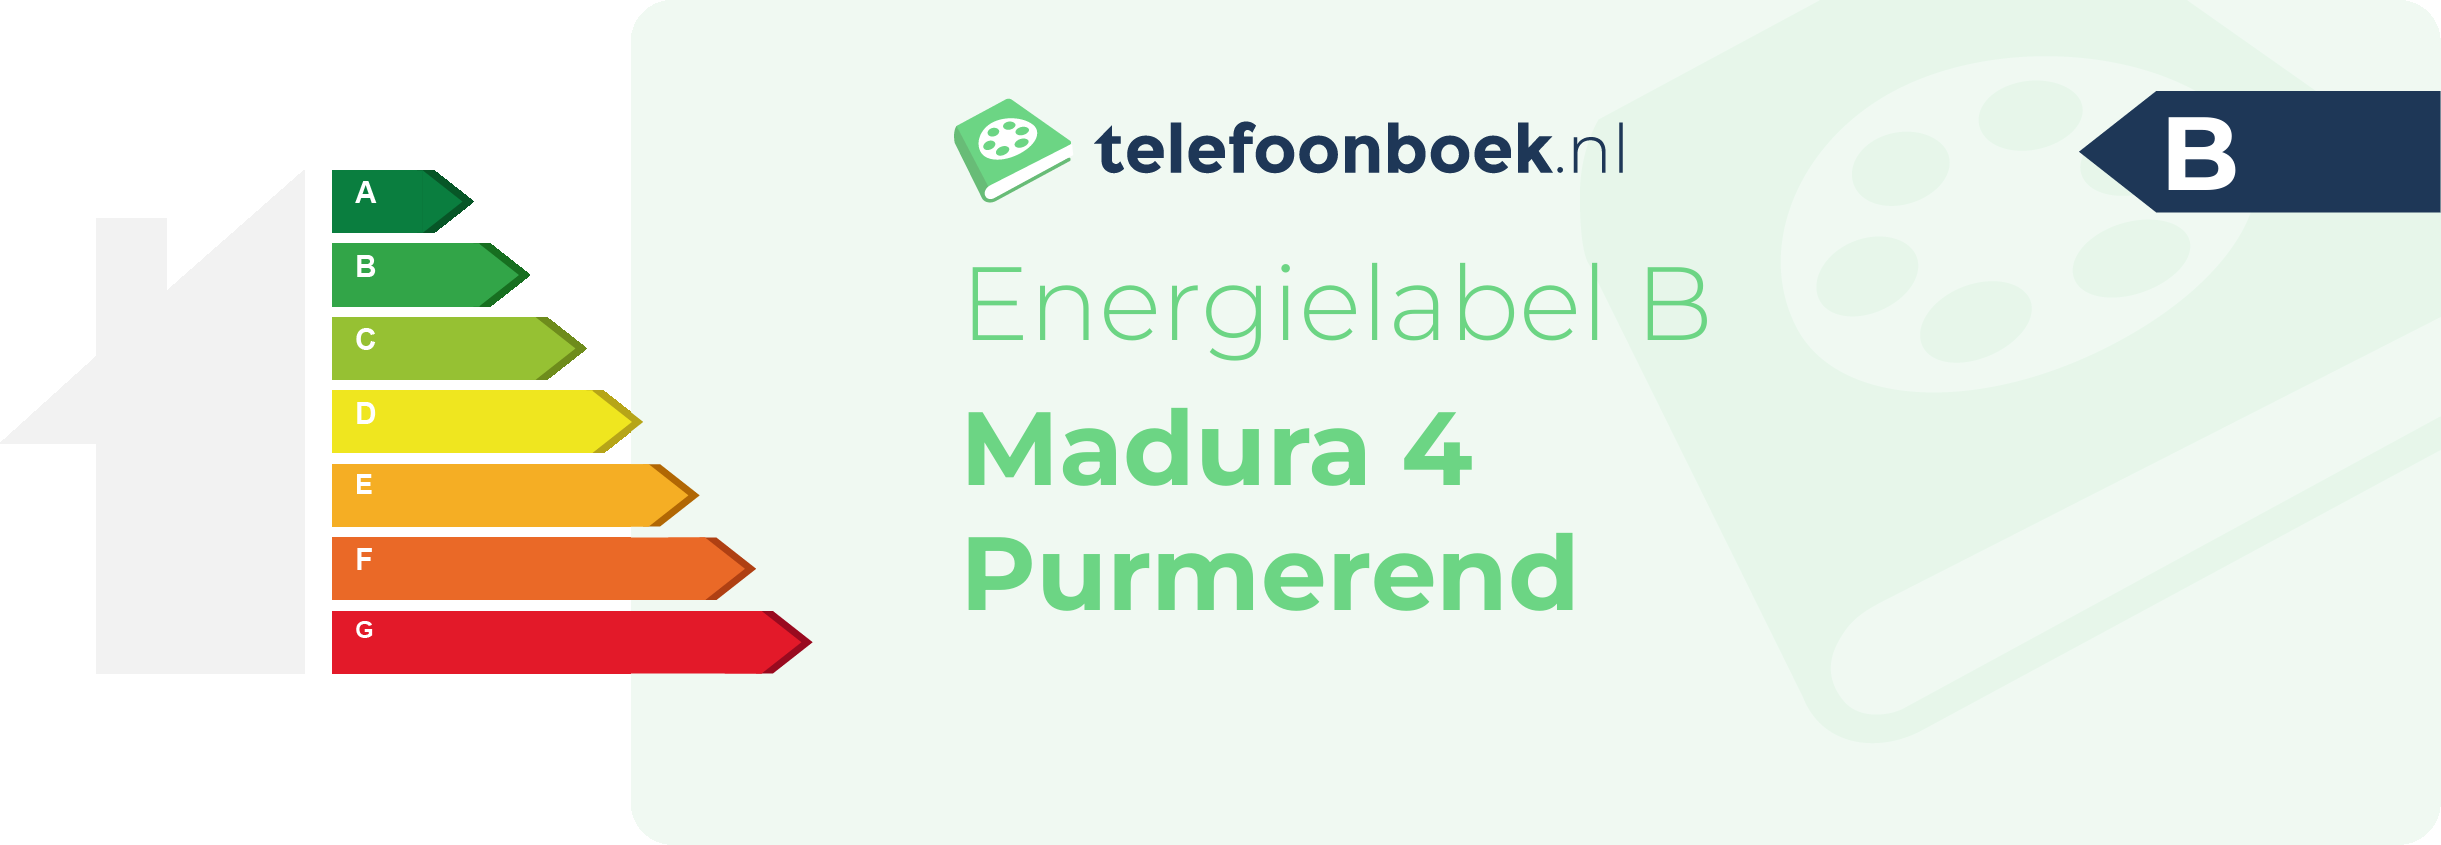 Energielabel Madura 4 Purmerend